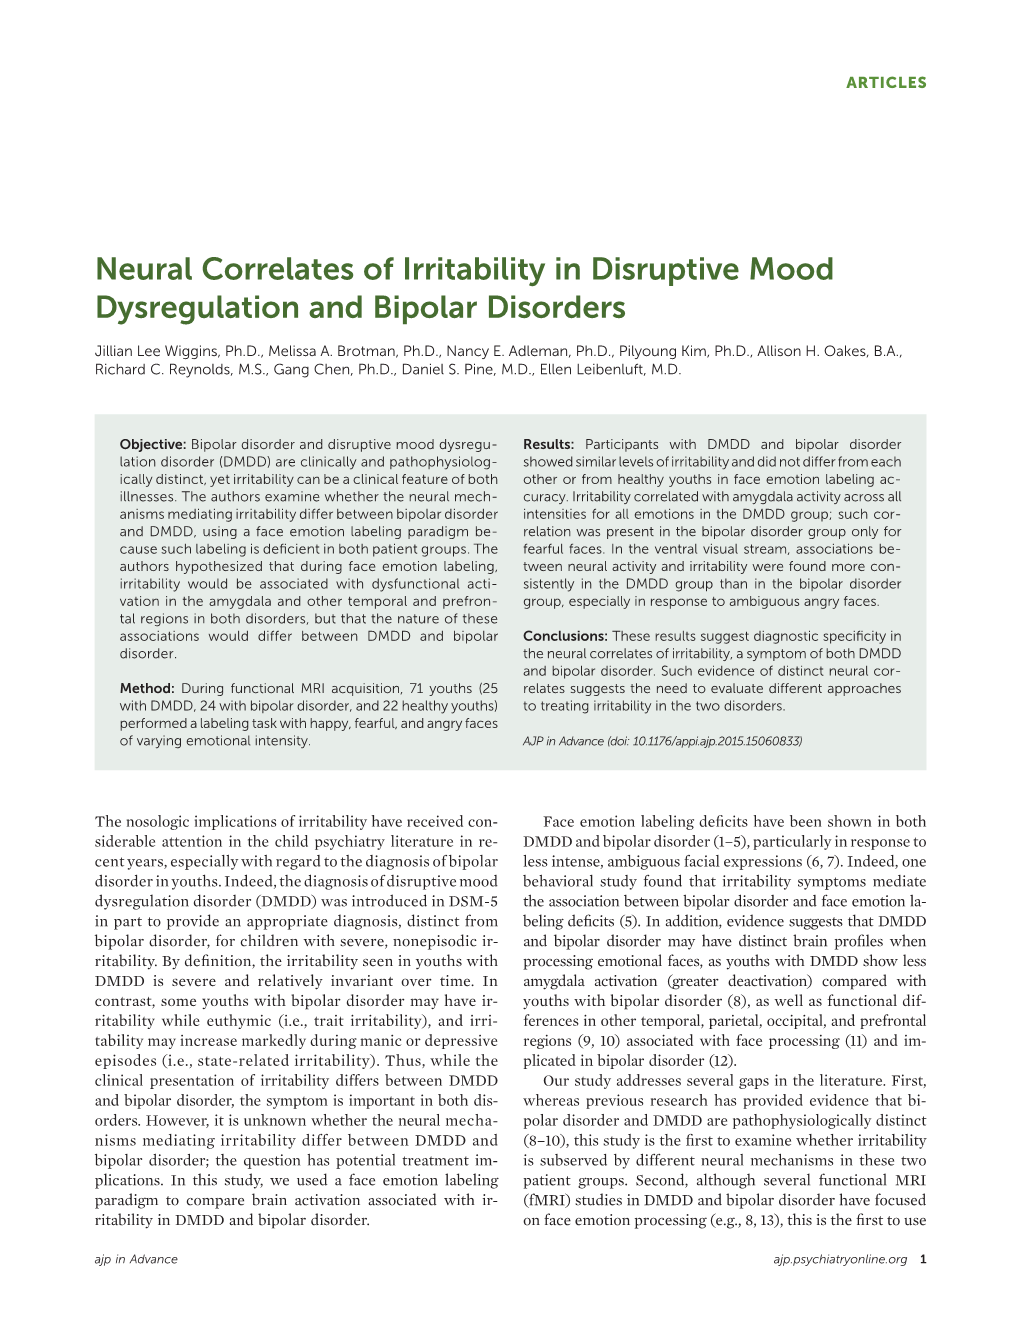 Neural Correlates of Irritability in Disruptive Mood Dysregulation and Bipolar Disorders